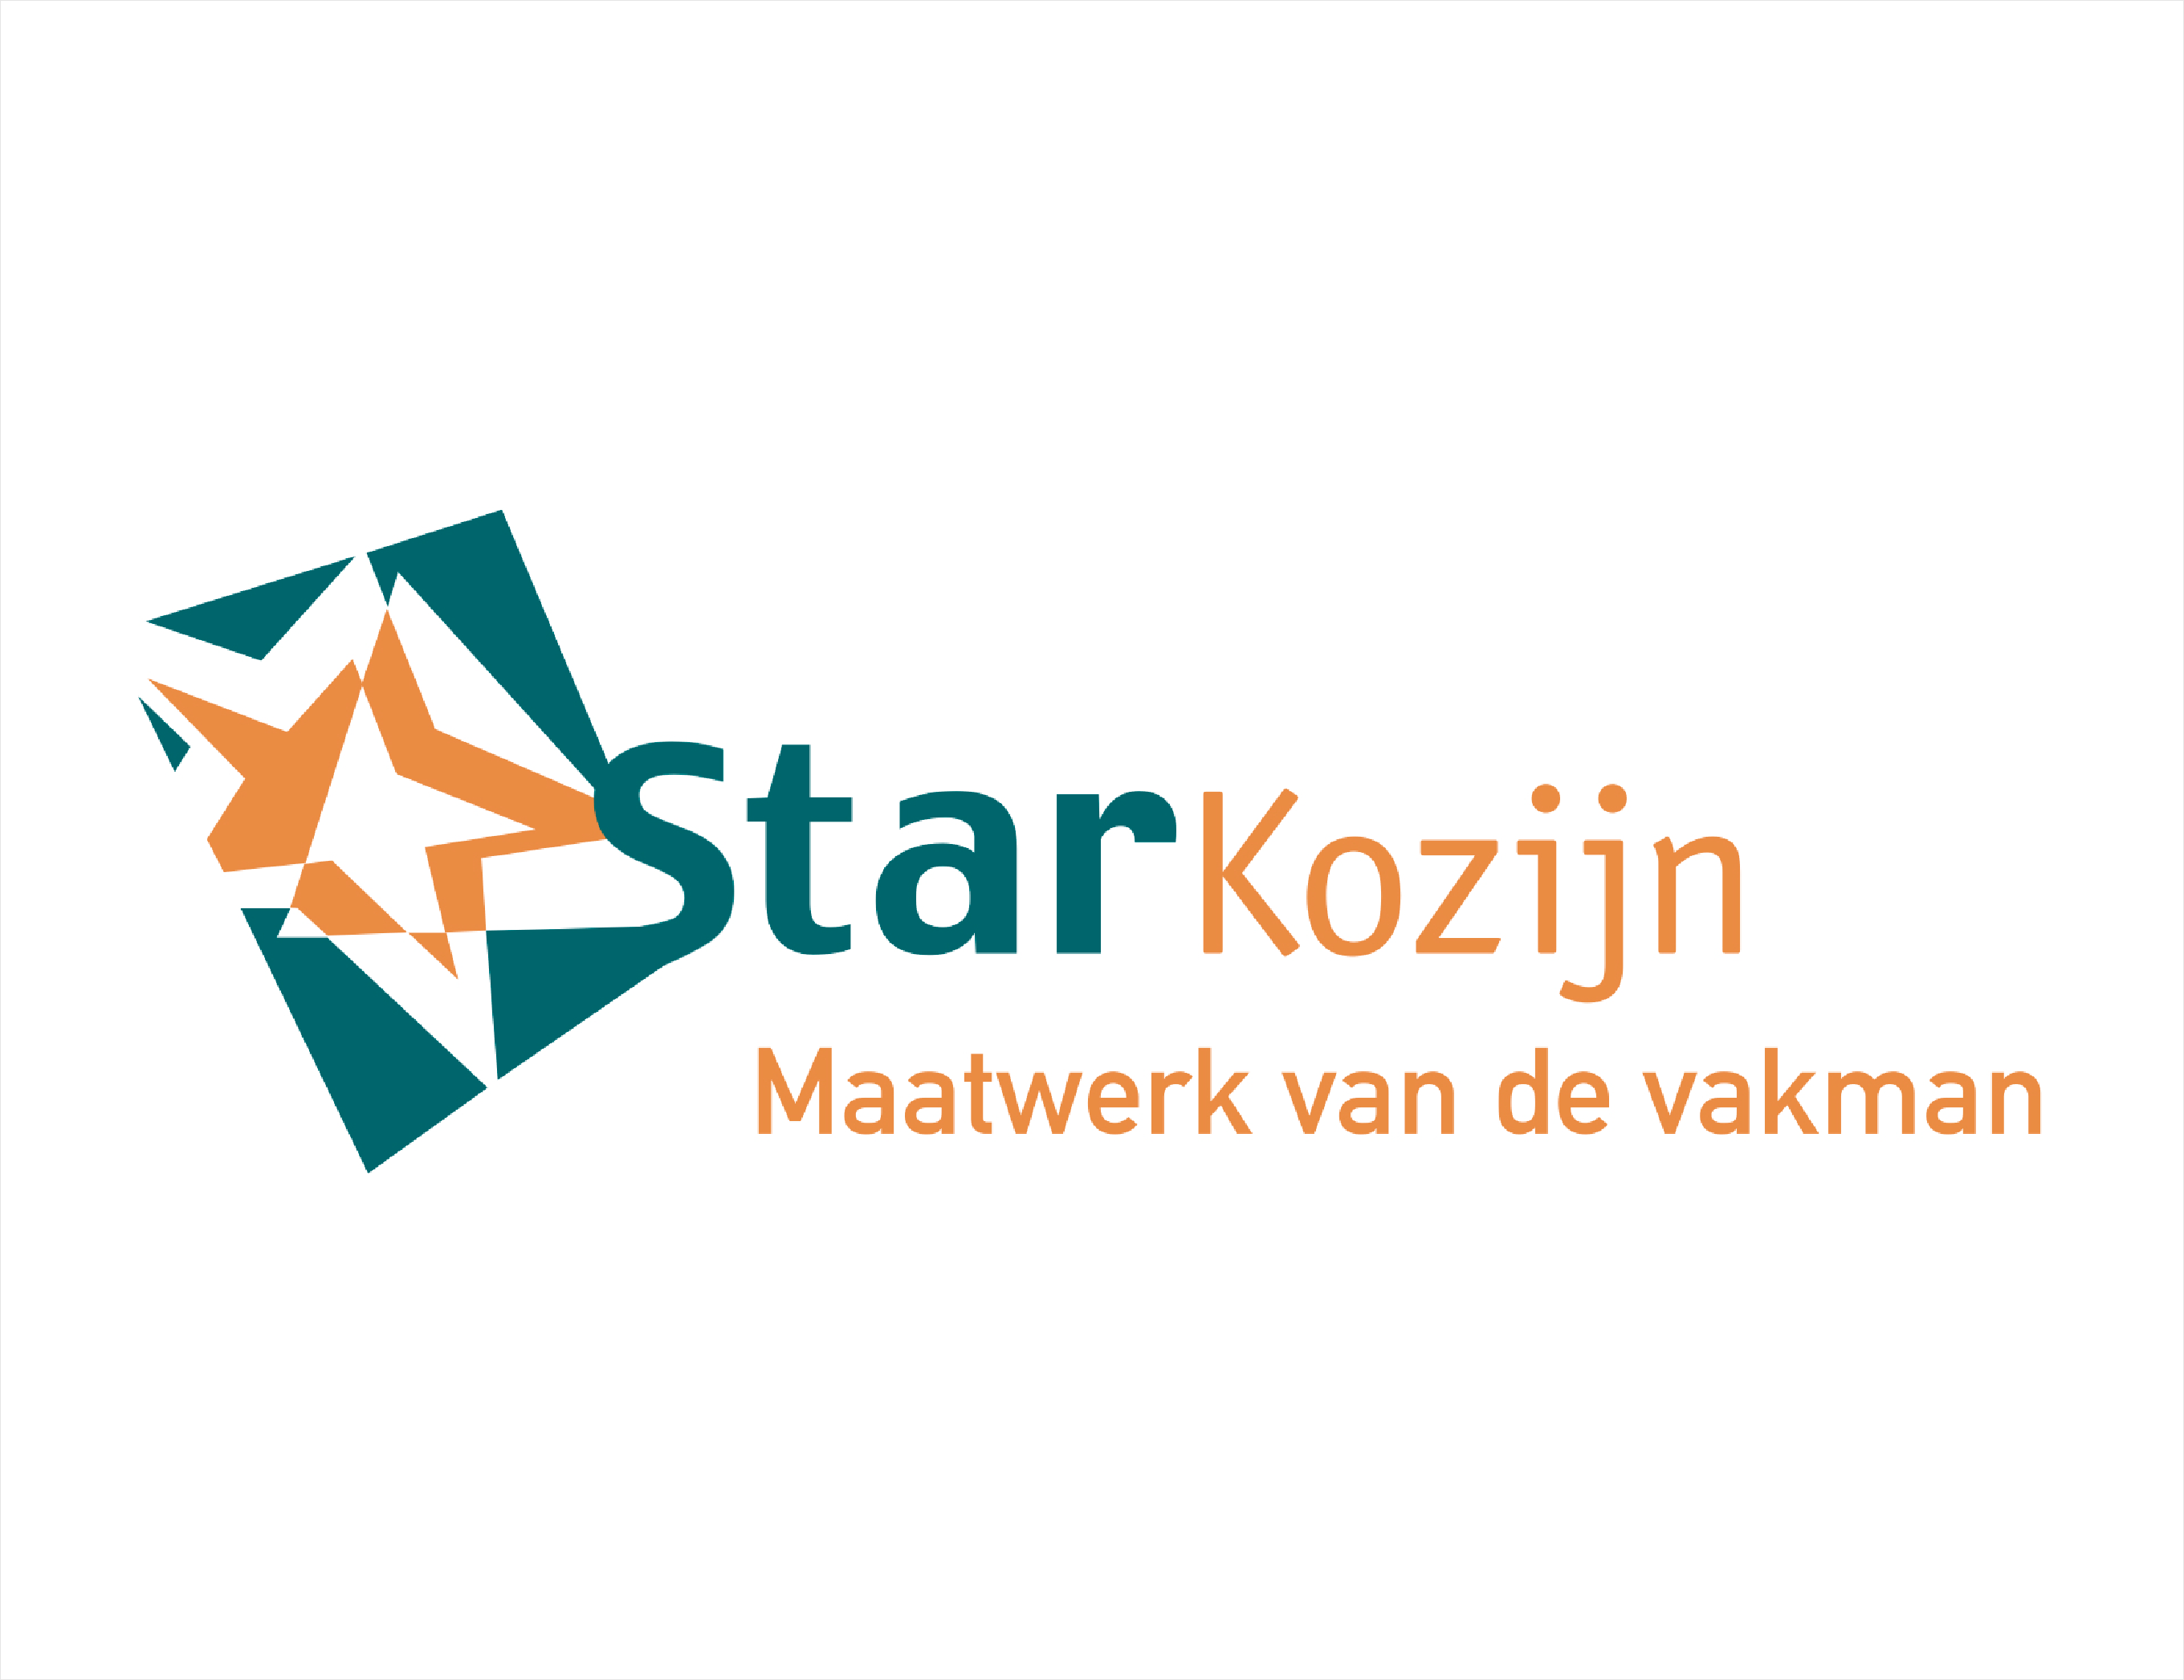 StarKozijn